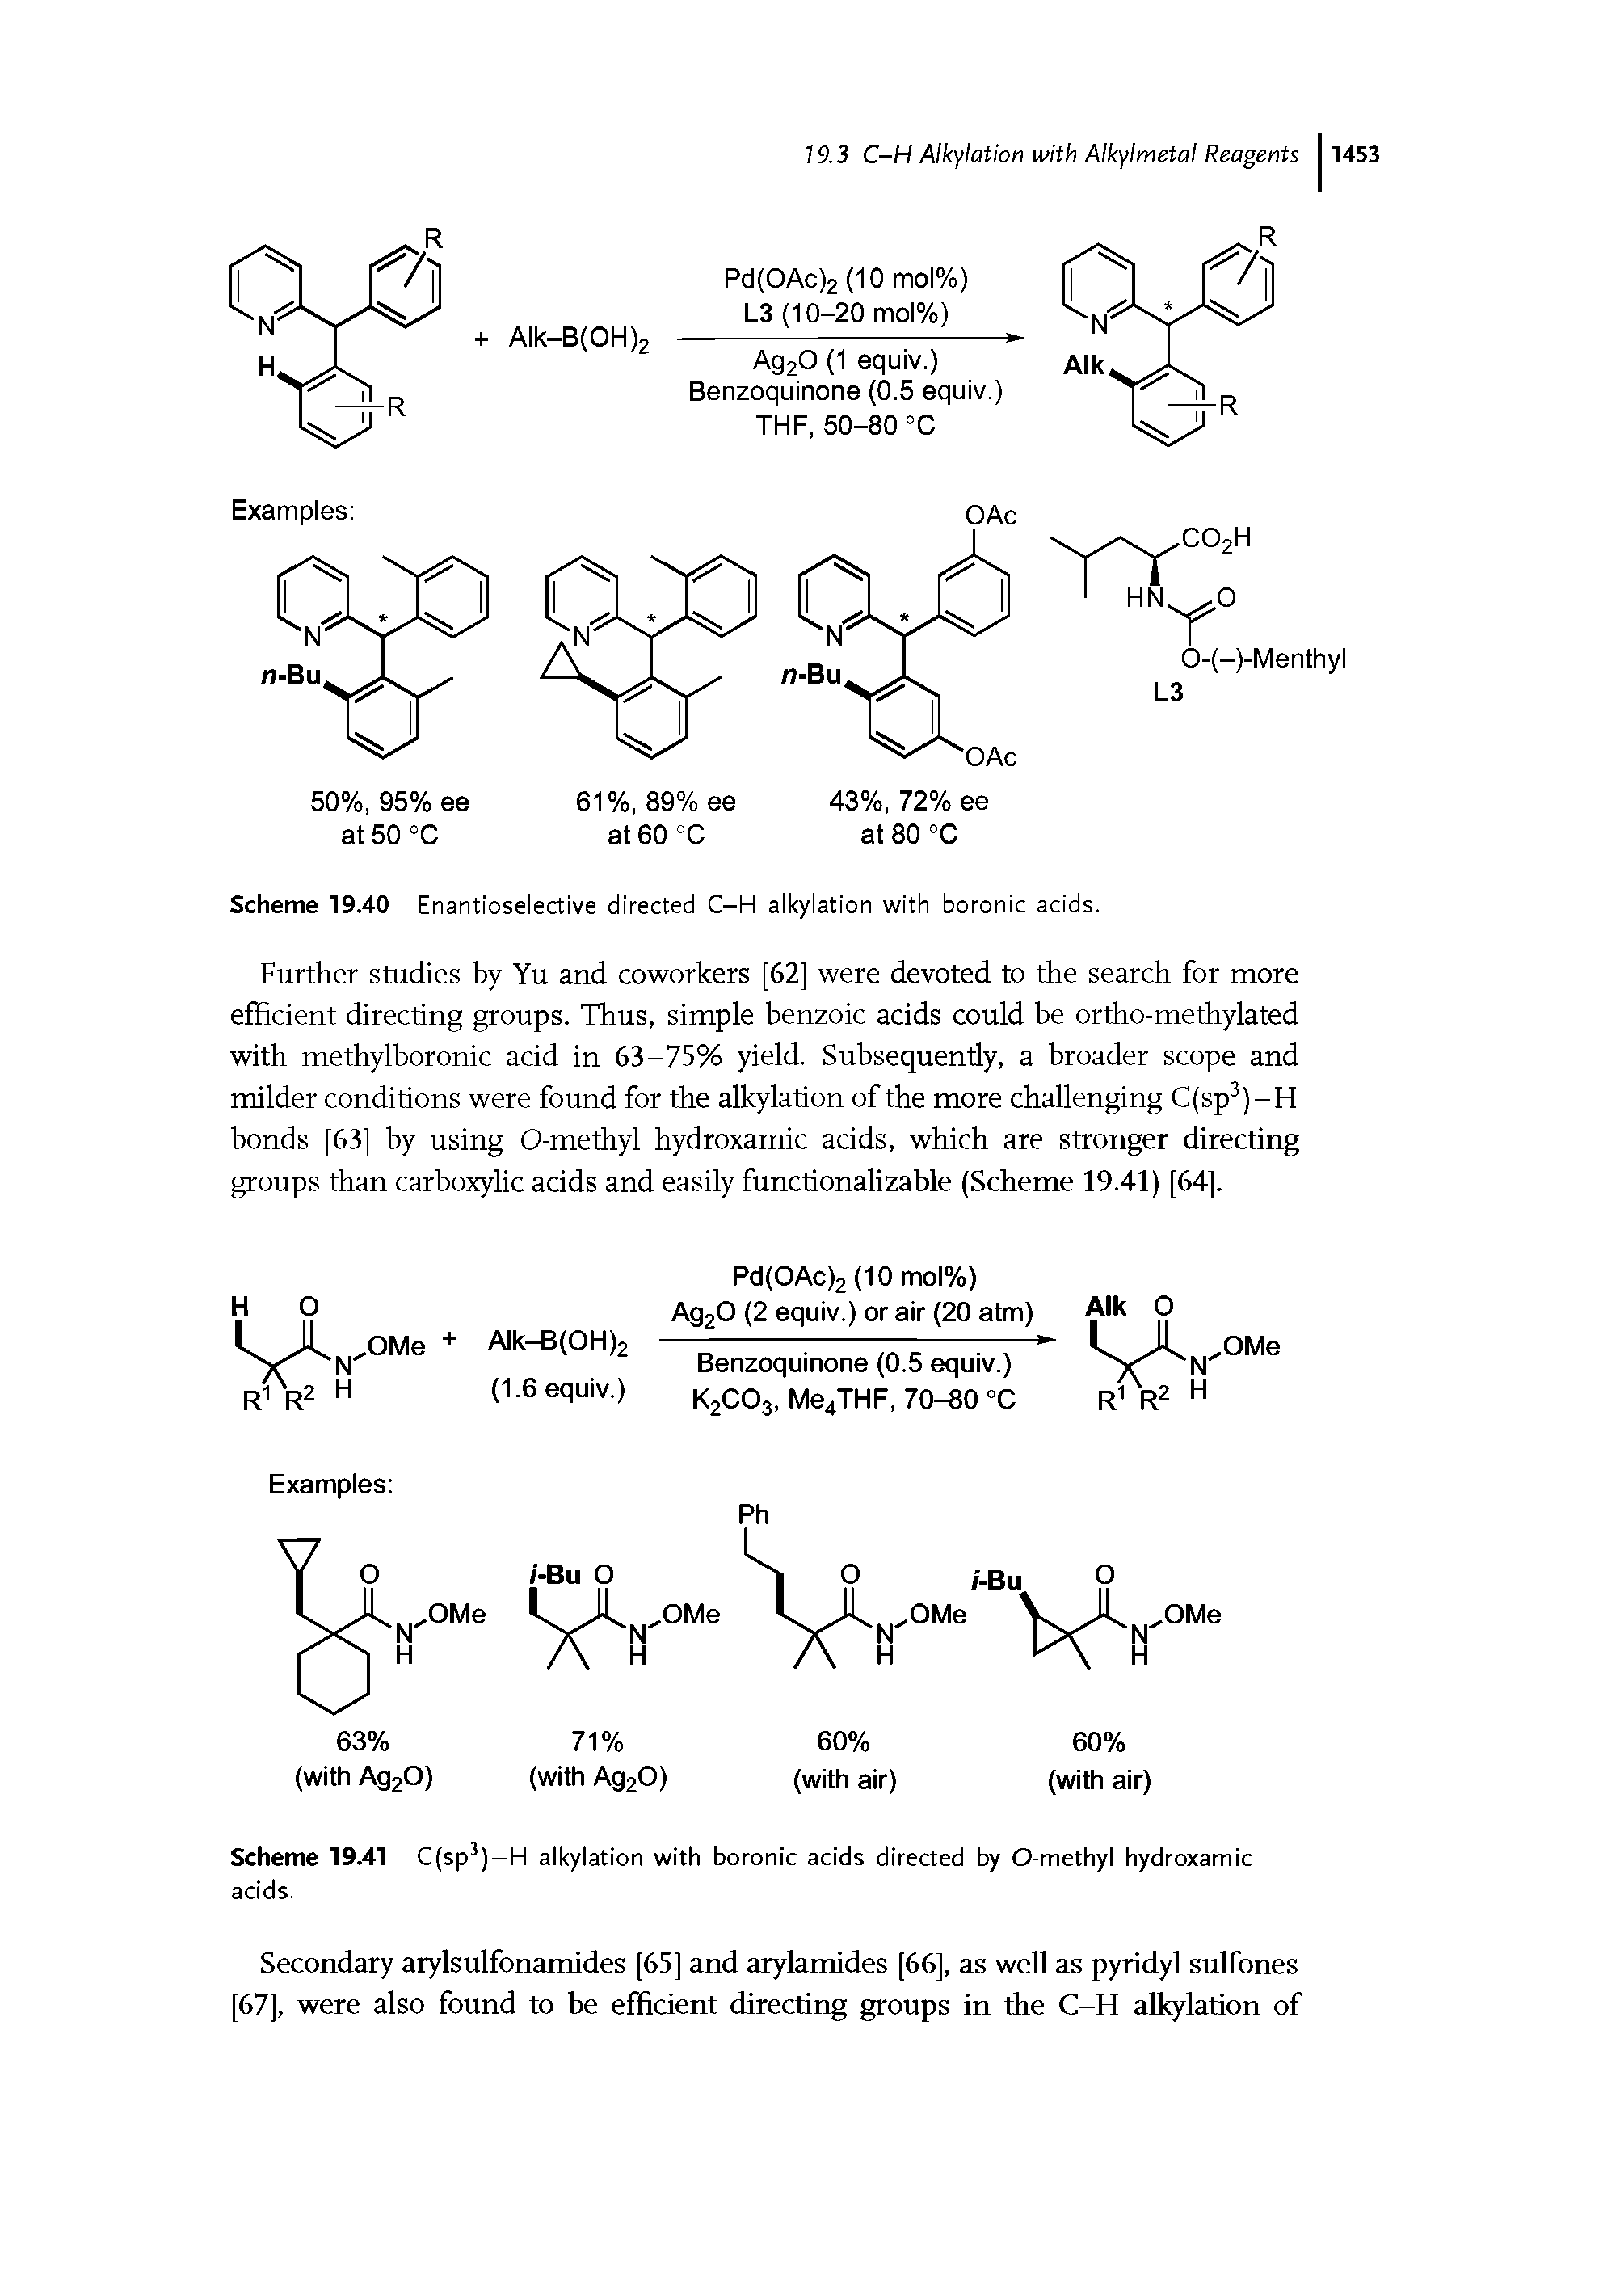 Scheme 19.41 C(sp )-H alkylation with boronic acids directed by O-methyl hydroxamic acids.